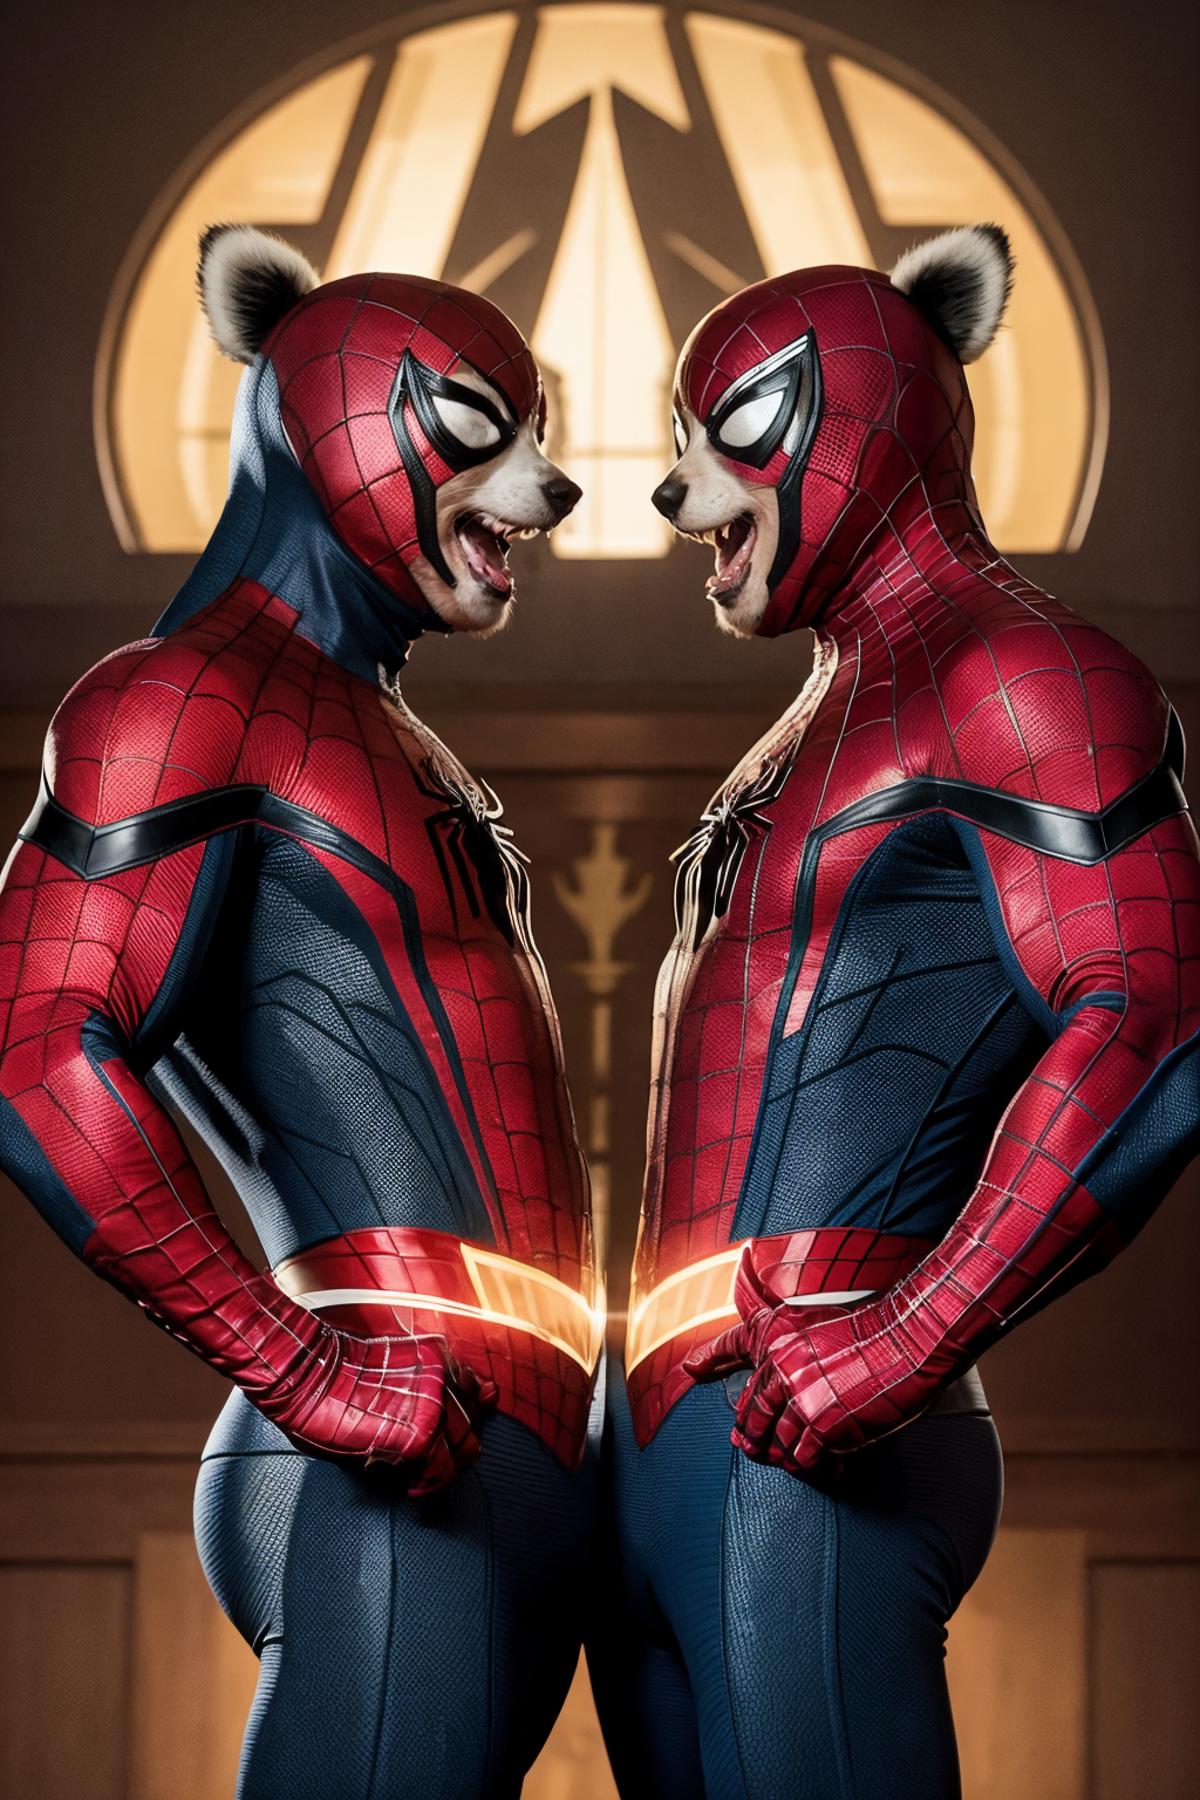 Spider-Man Costume image by CGArtist